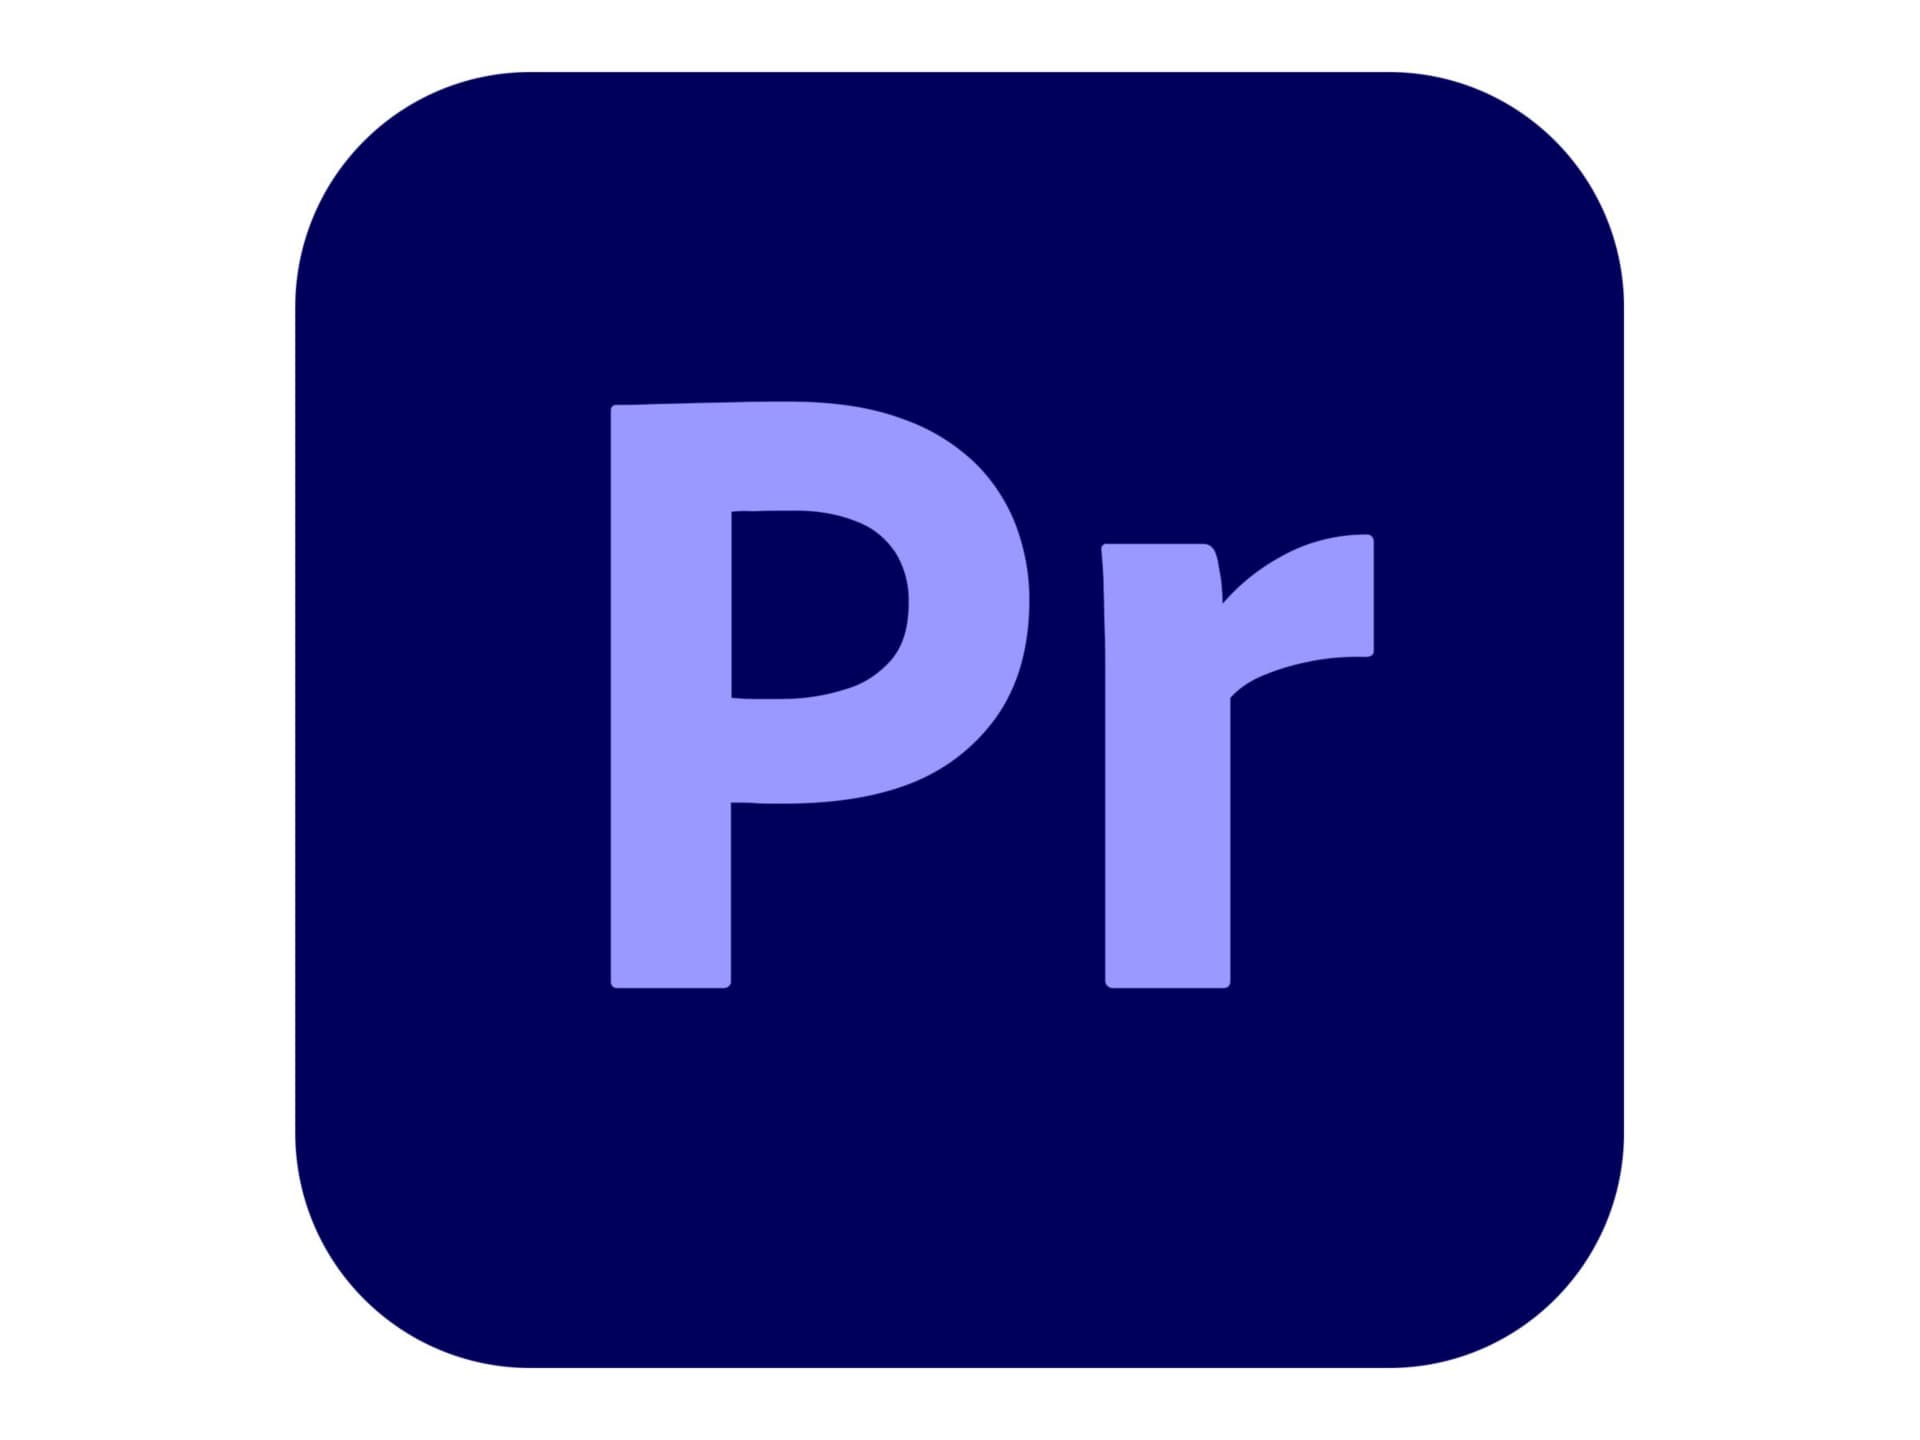 Adobe Premiere Pro CC for Enterprise - Subscription New (8 months) - 1 named user